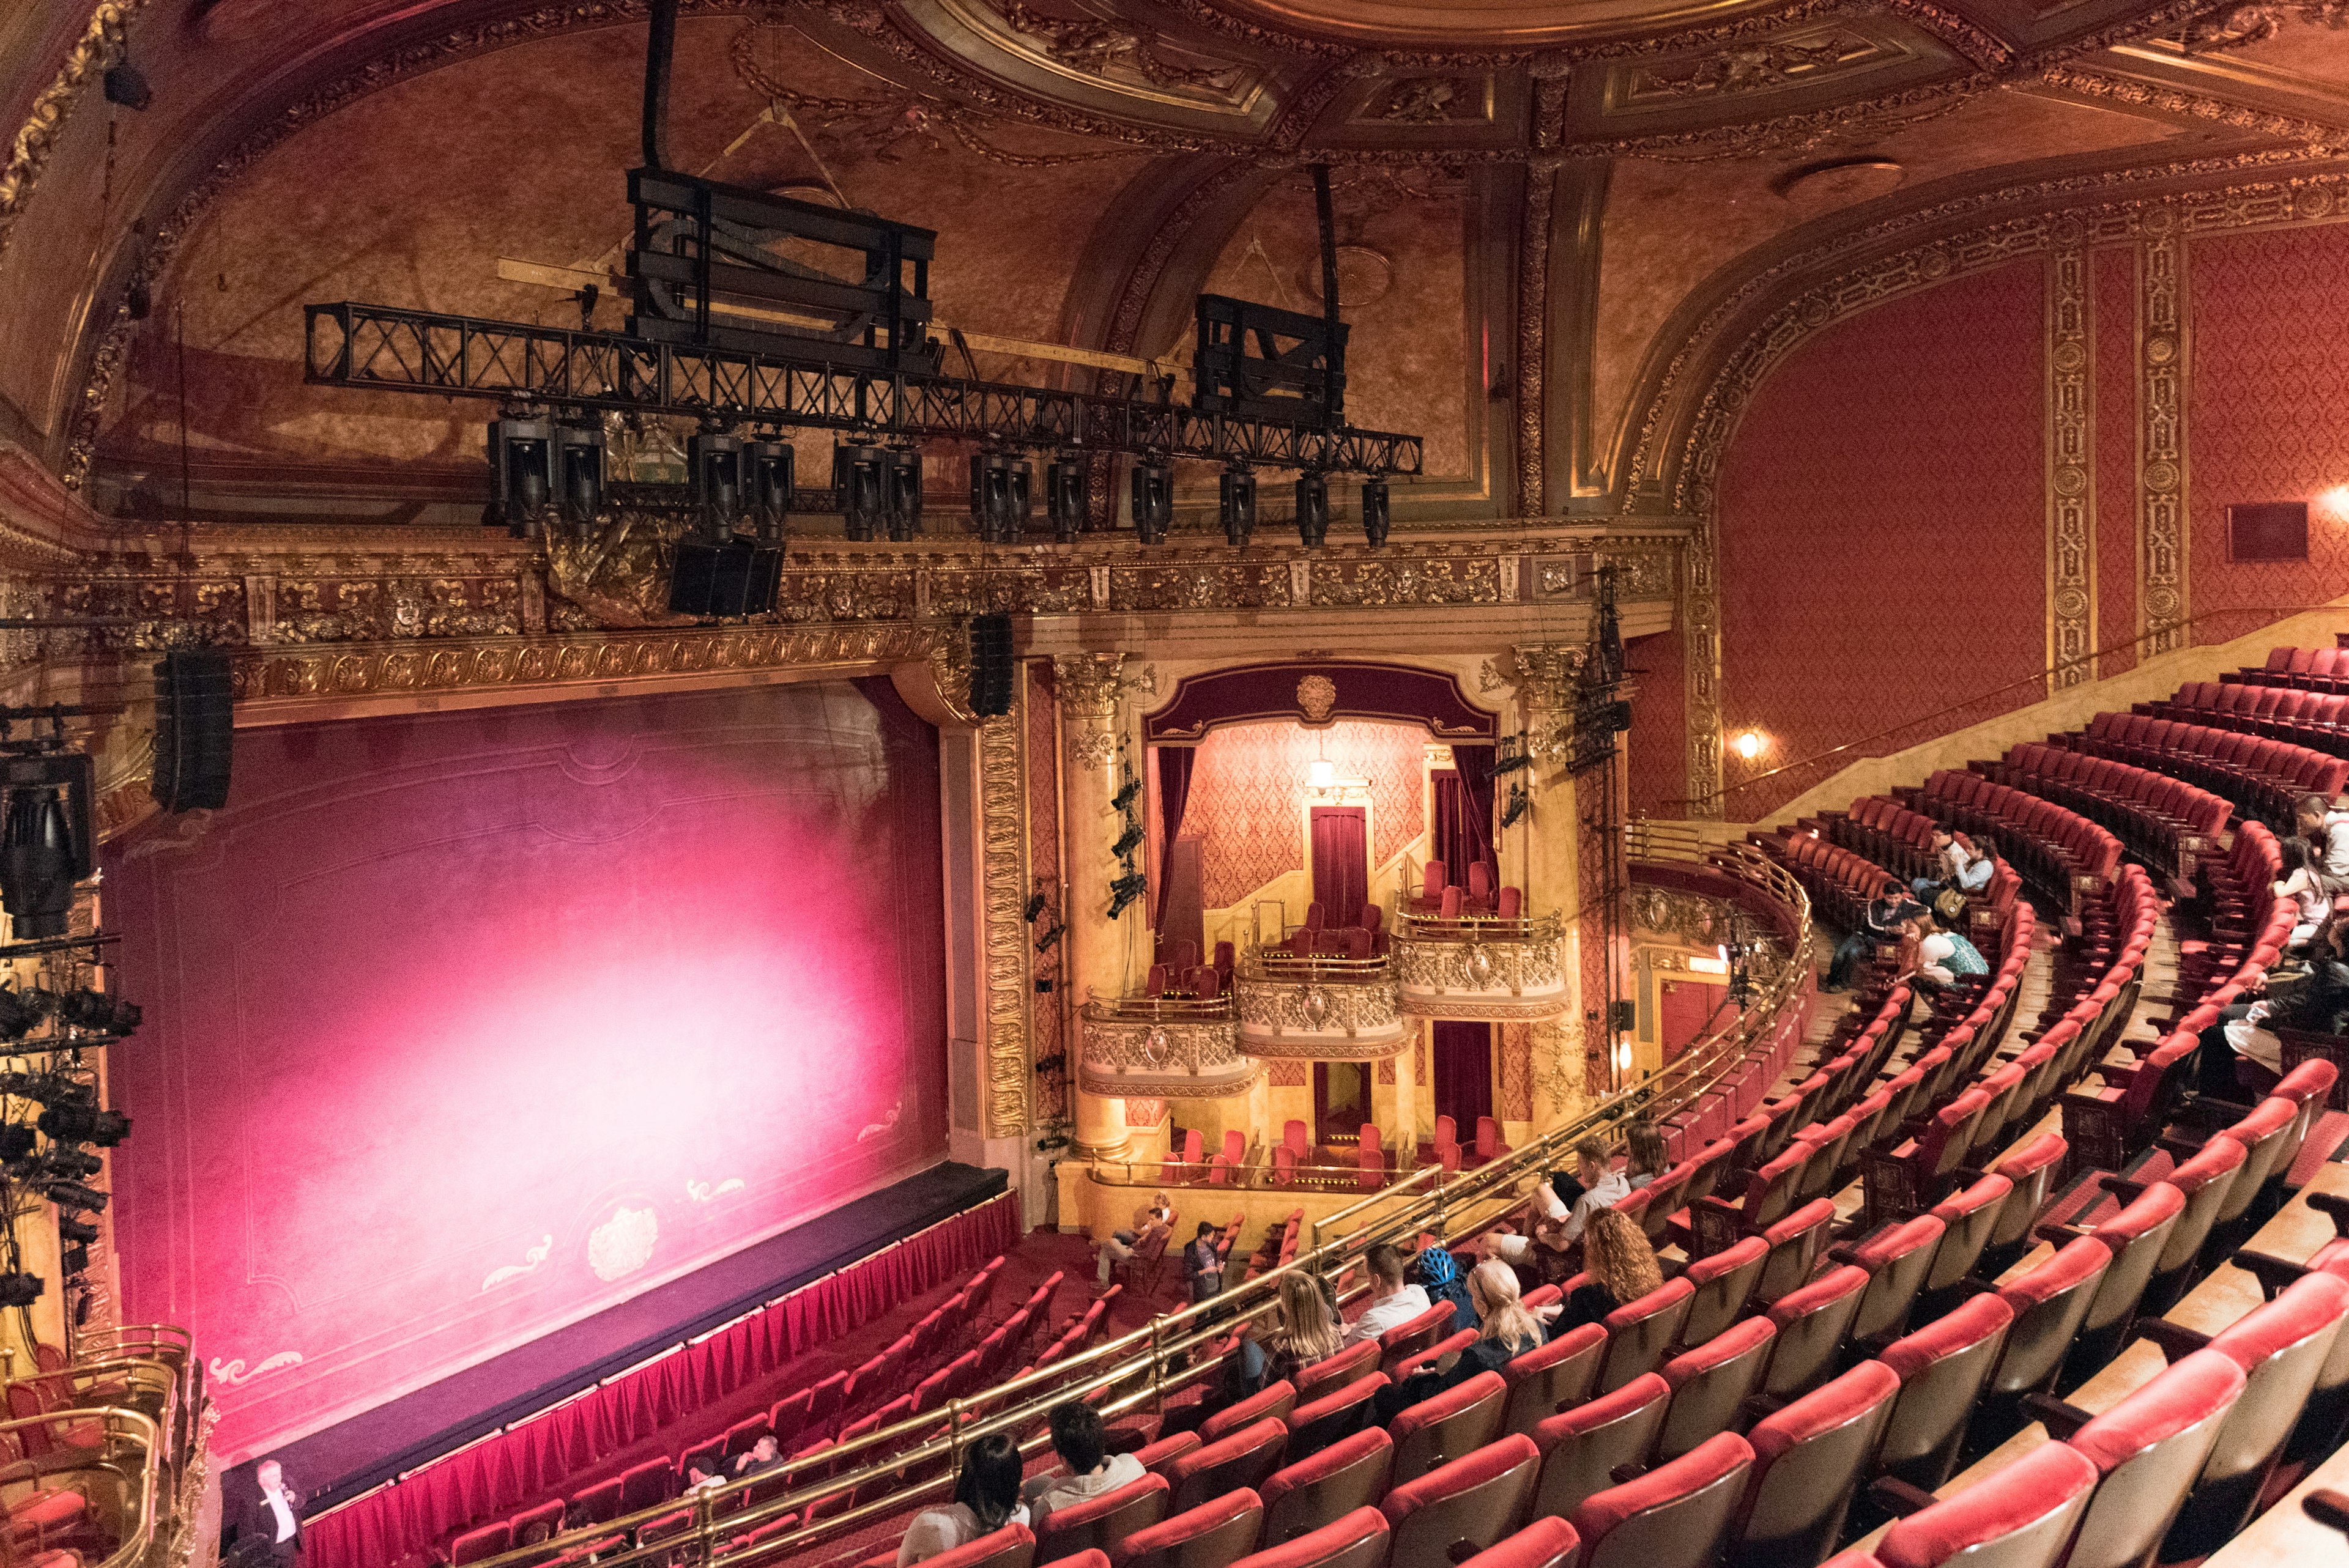 Restored interior of the magnificent Elgin Theater